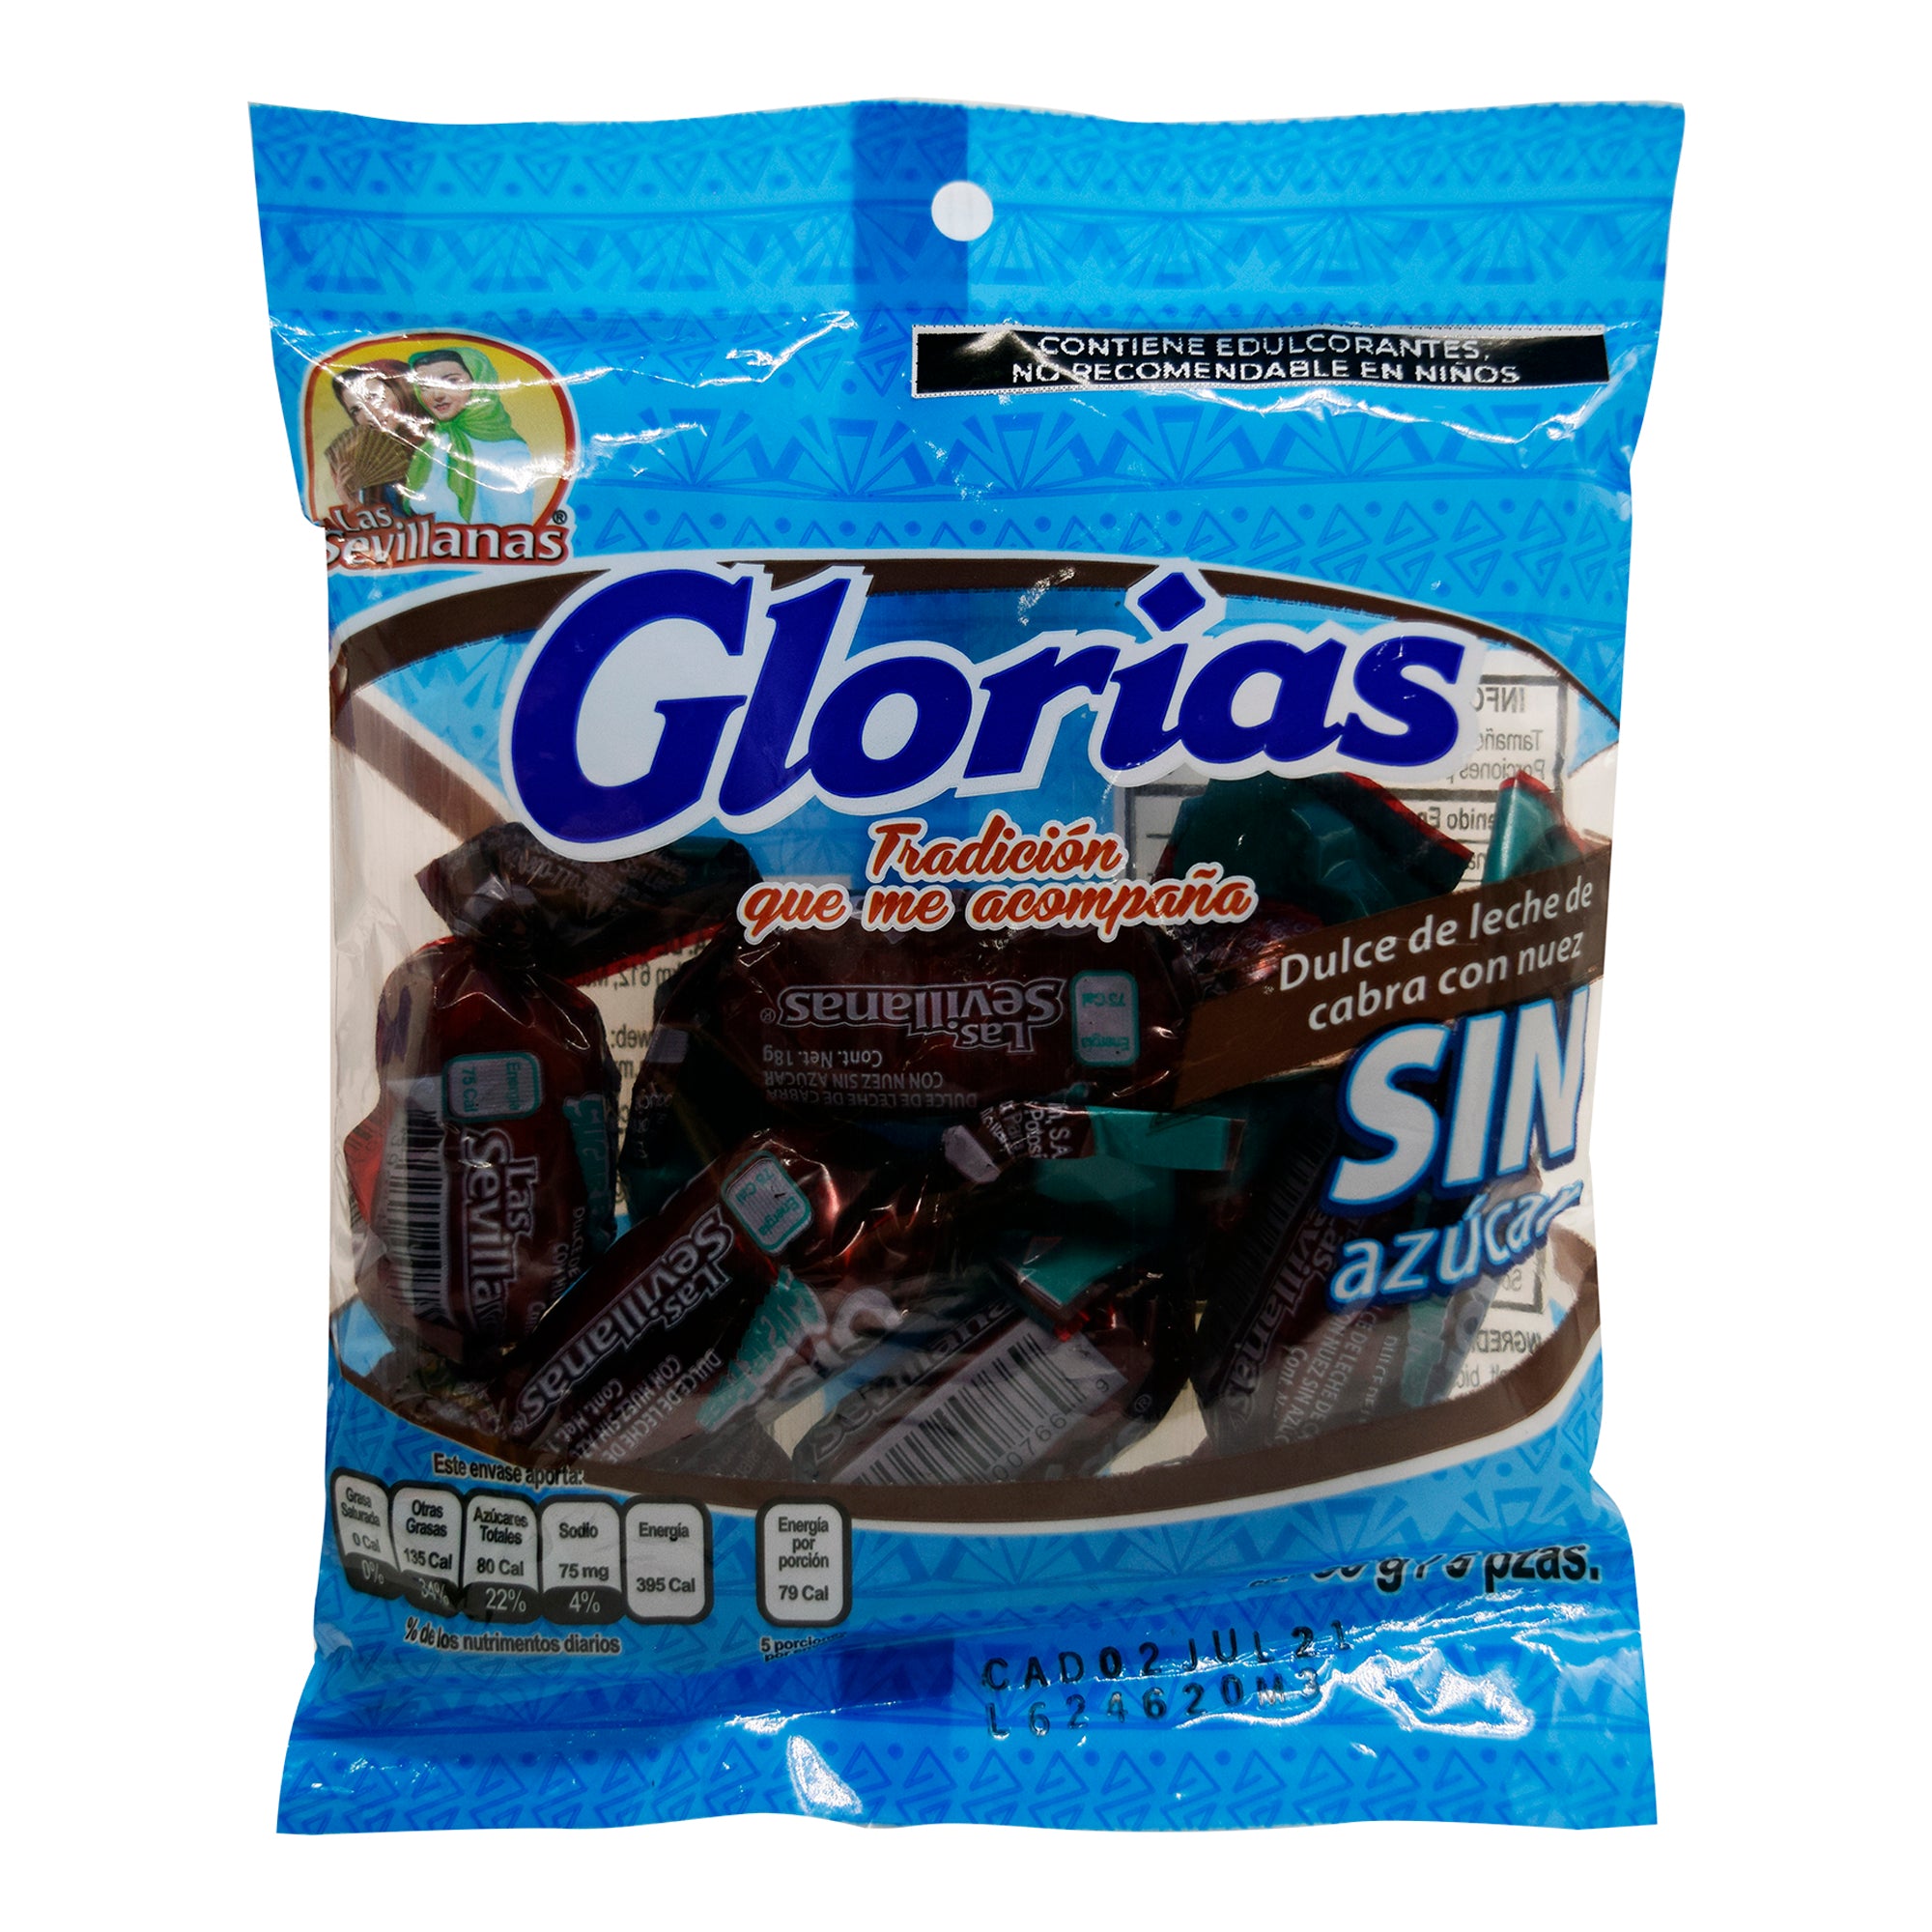 Gloria sugar free 90 g